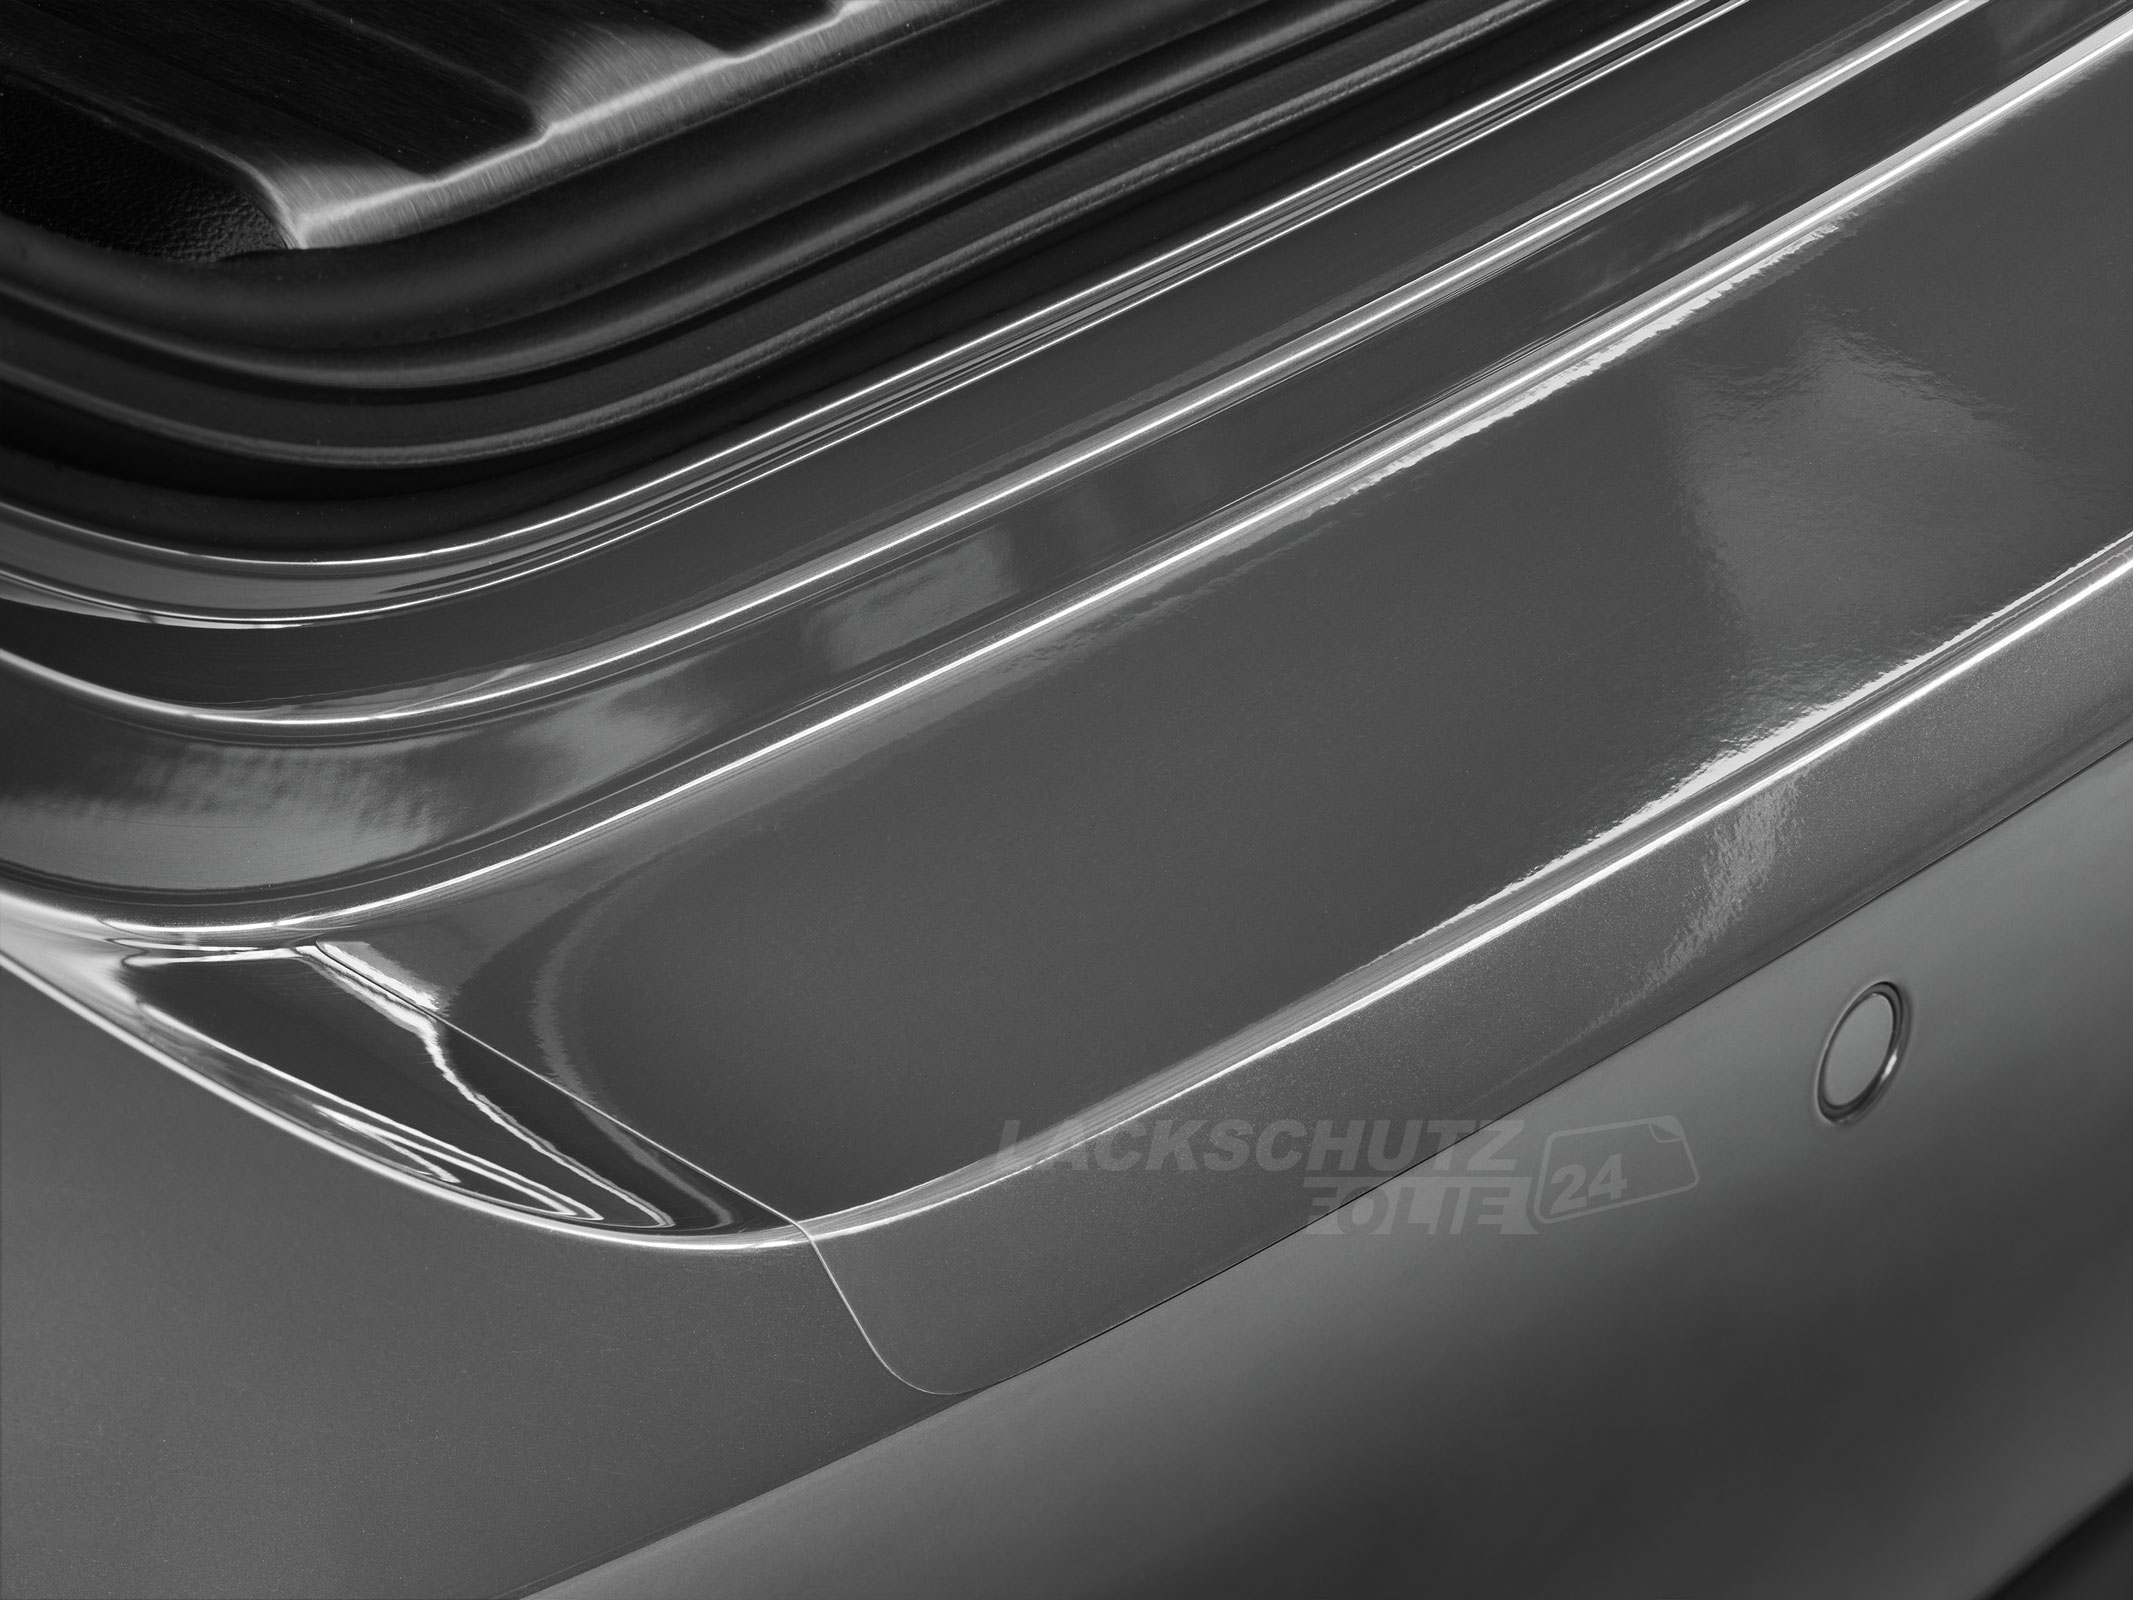 Ladekantenschutzfolie - Transparent Glatt Hochglänzend für Hyundai Santa Fe Typ CM, Facelift, BJ 2009-2012